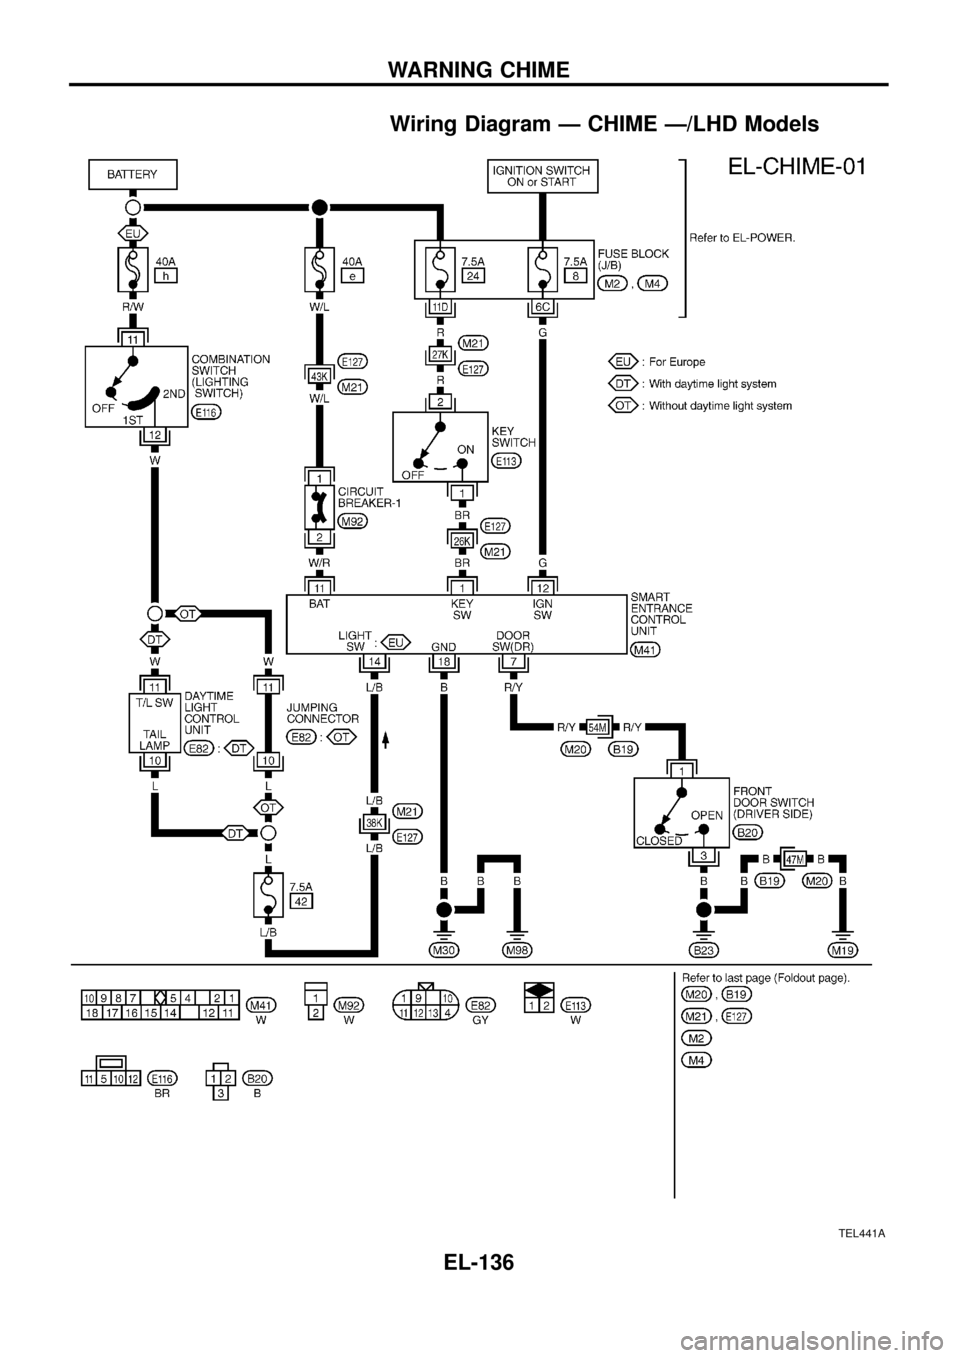 NISSAN PATROL 1998 Y61 / 5.G Electrical System Owners Manual Wiring Diagram Ð CHIME Ð/LHD Models
TEL441A
WARNING CHIME
EL-136 